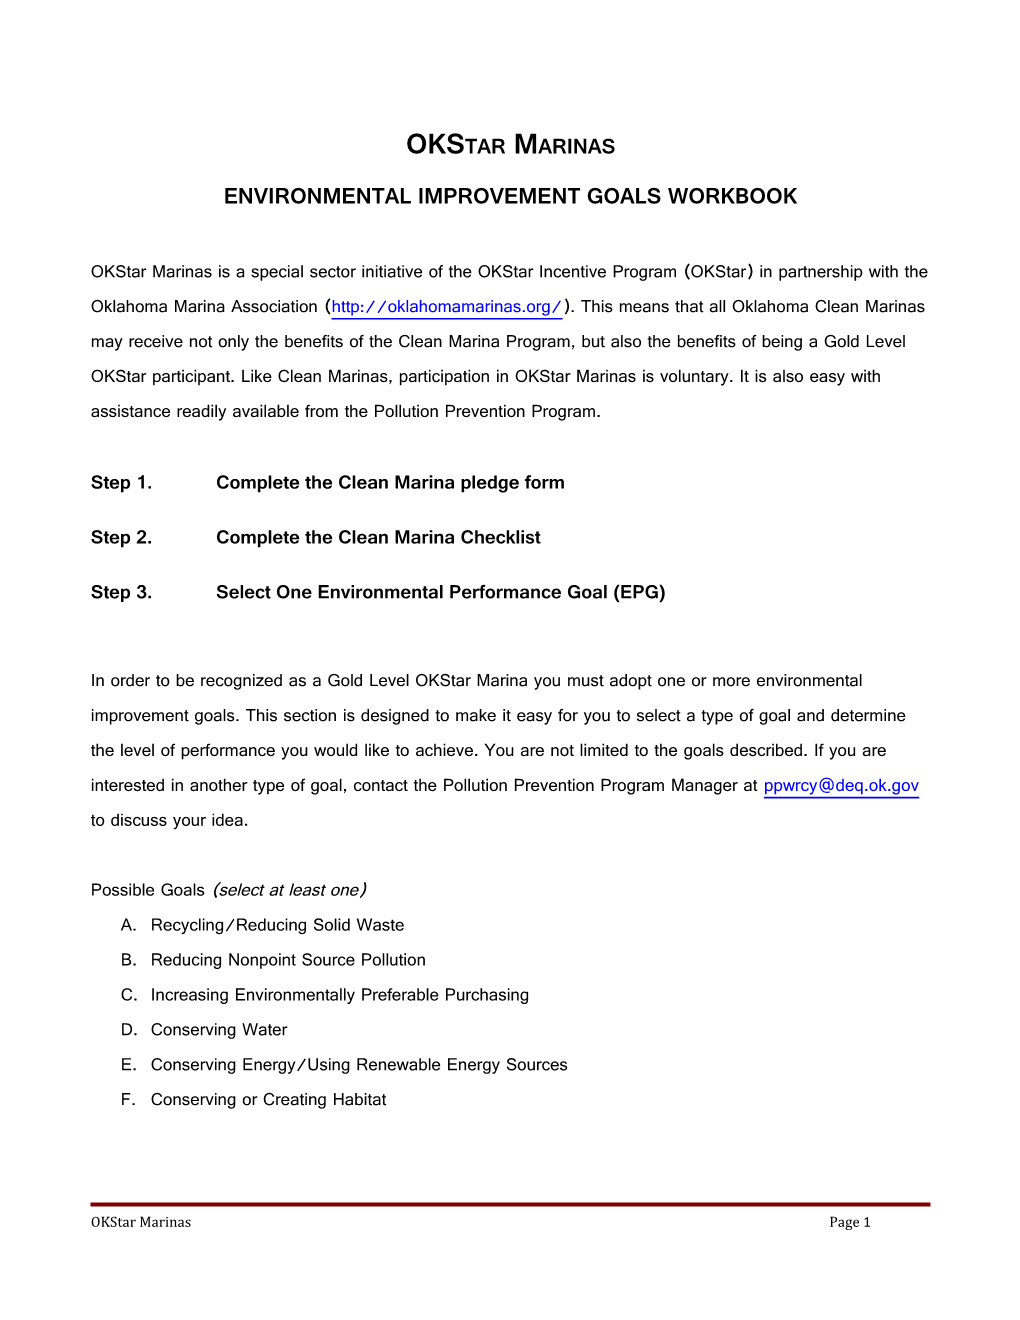 Environmental Improvement Goals Workbook